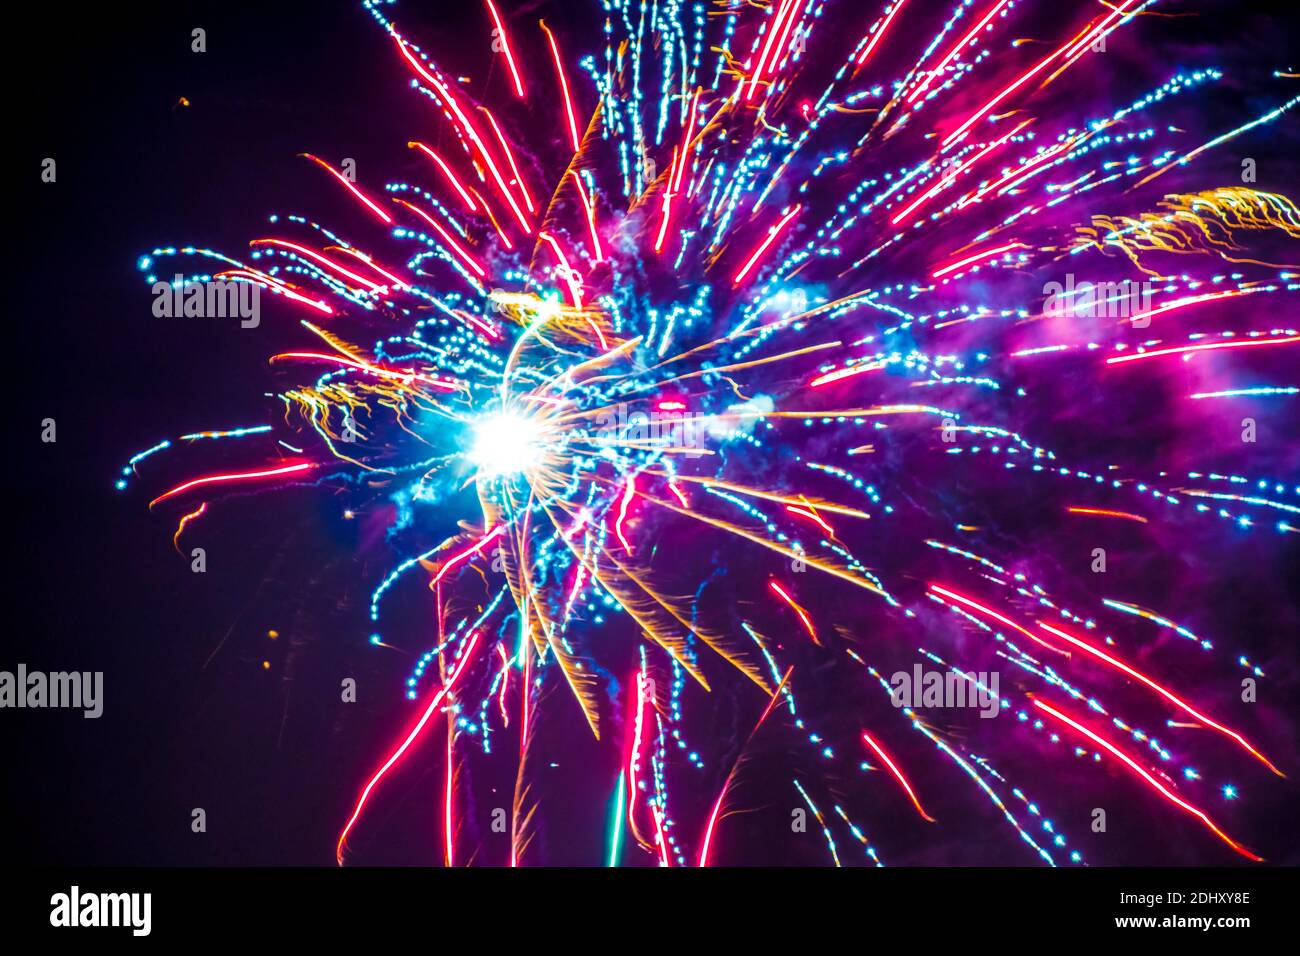 Colorful fireworks display in the dark night sky. Stock Photo